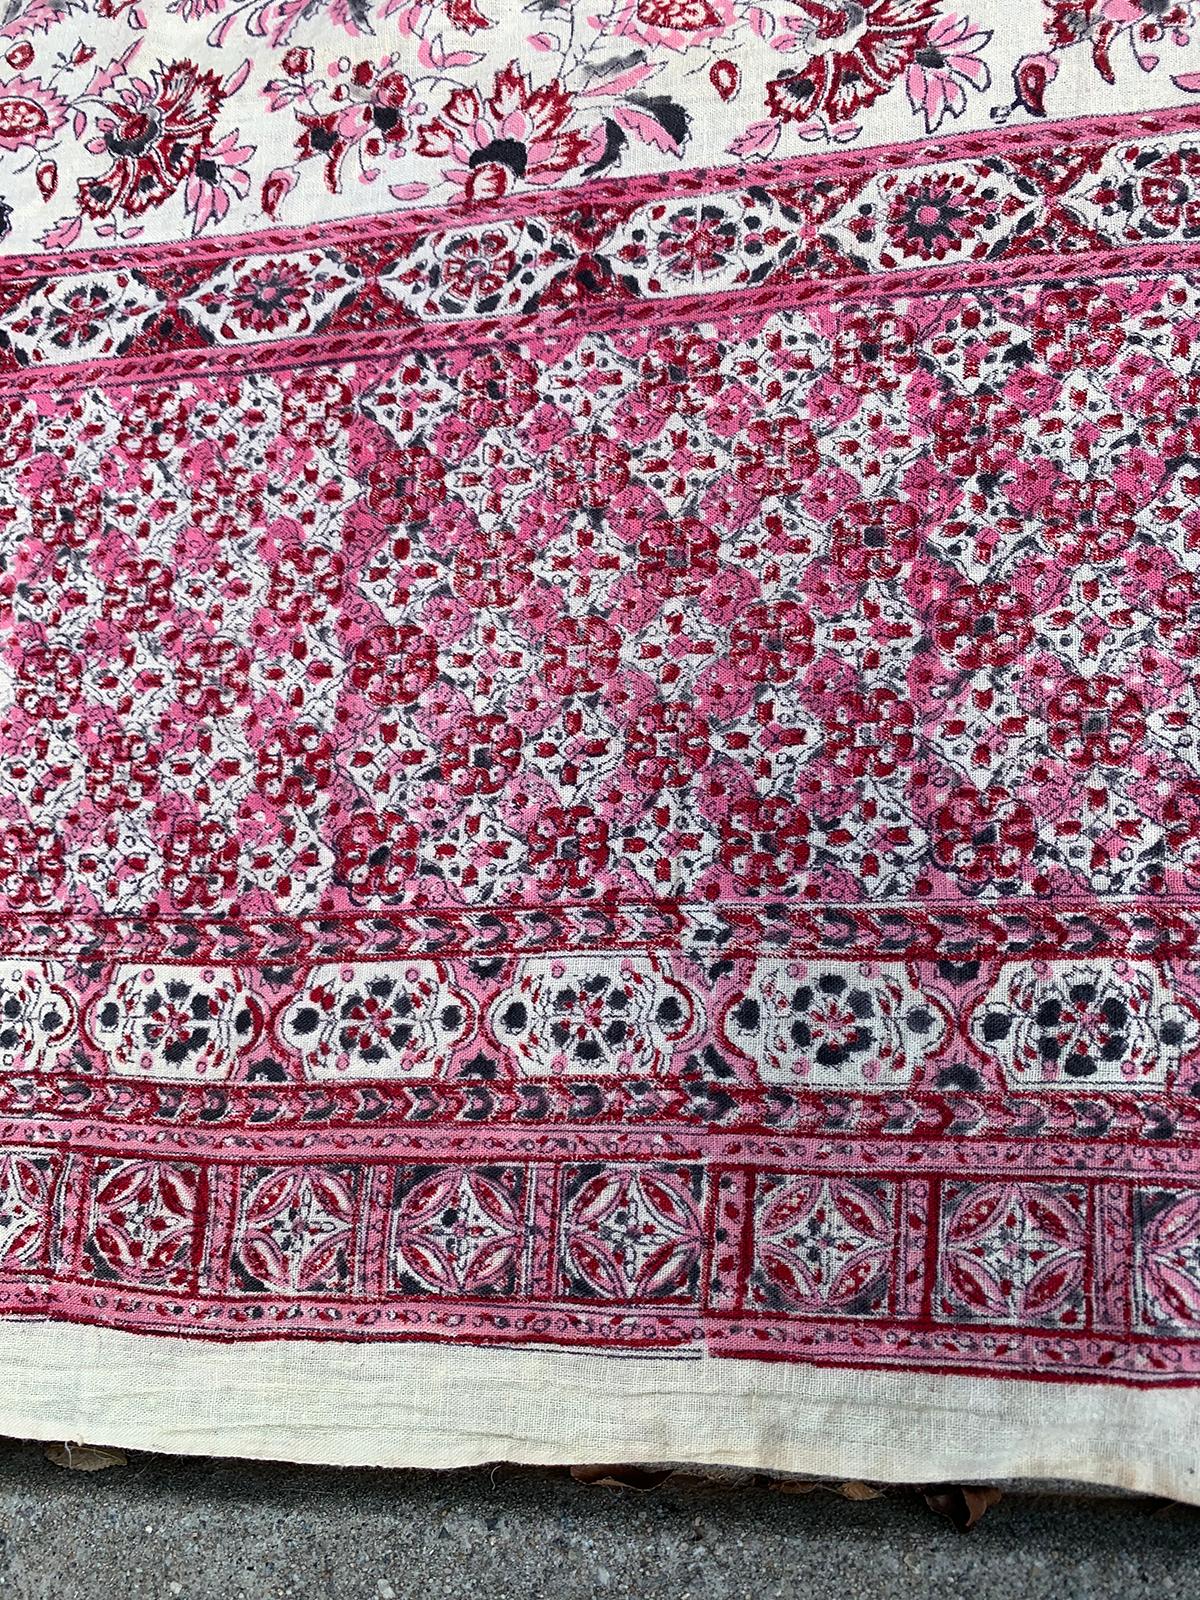 20th Century Indian Pink Lotus Mandala Fabric/Textile For Sale 2